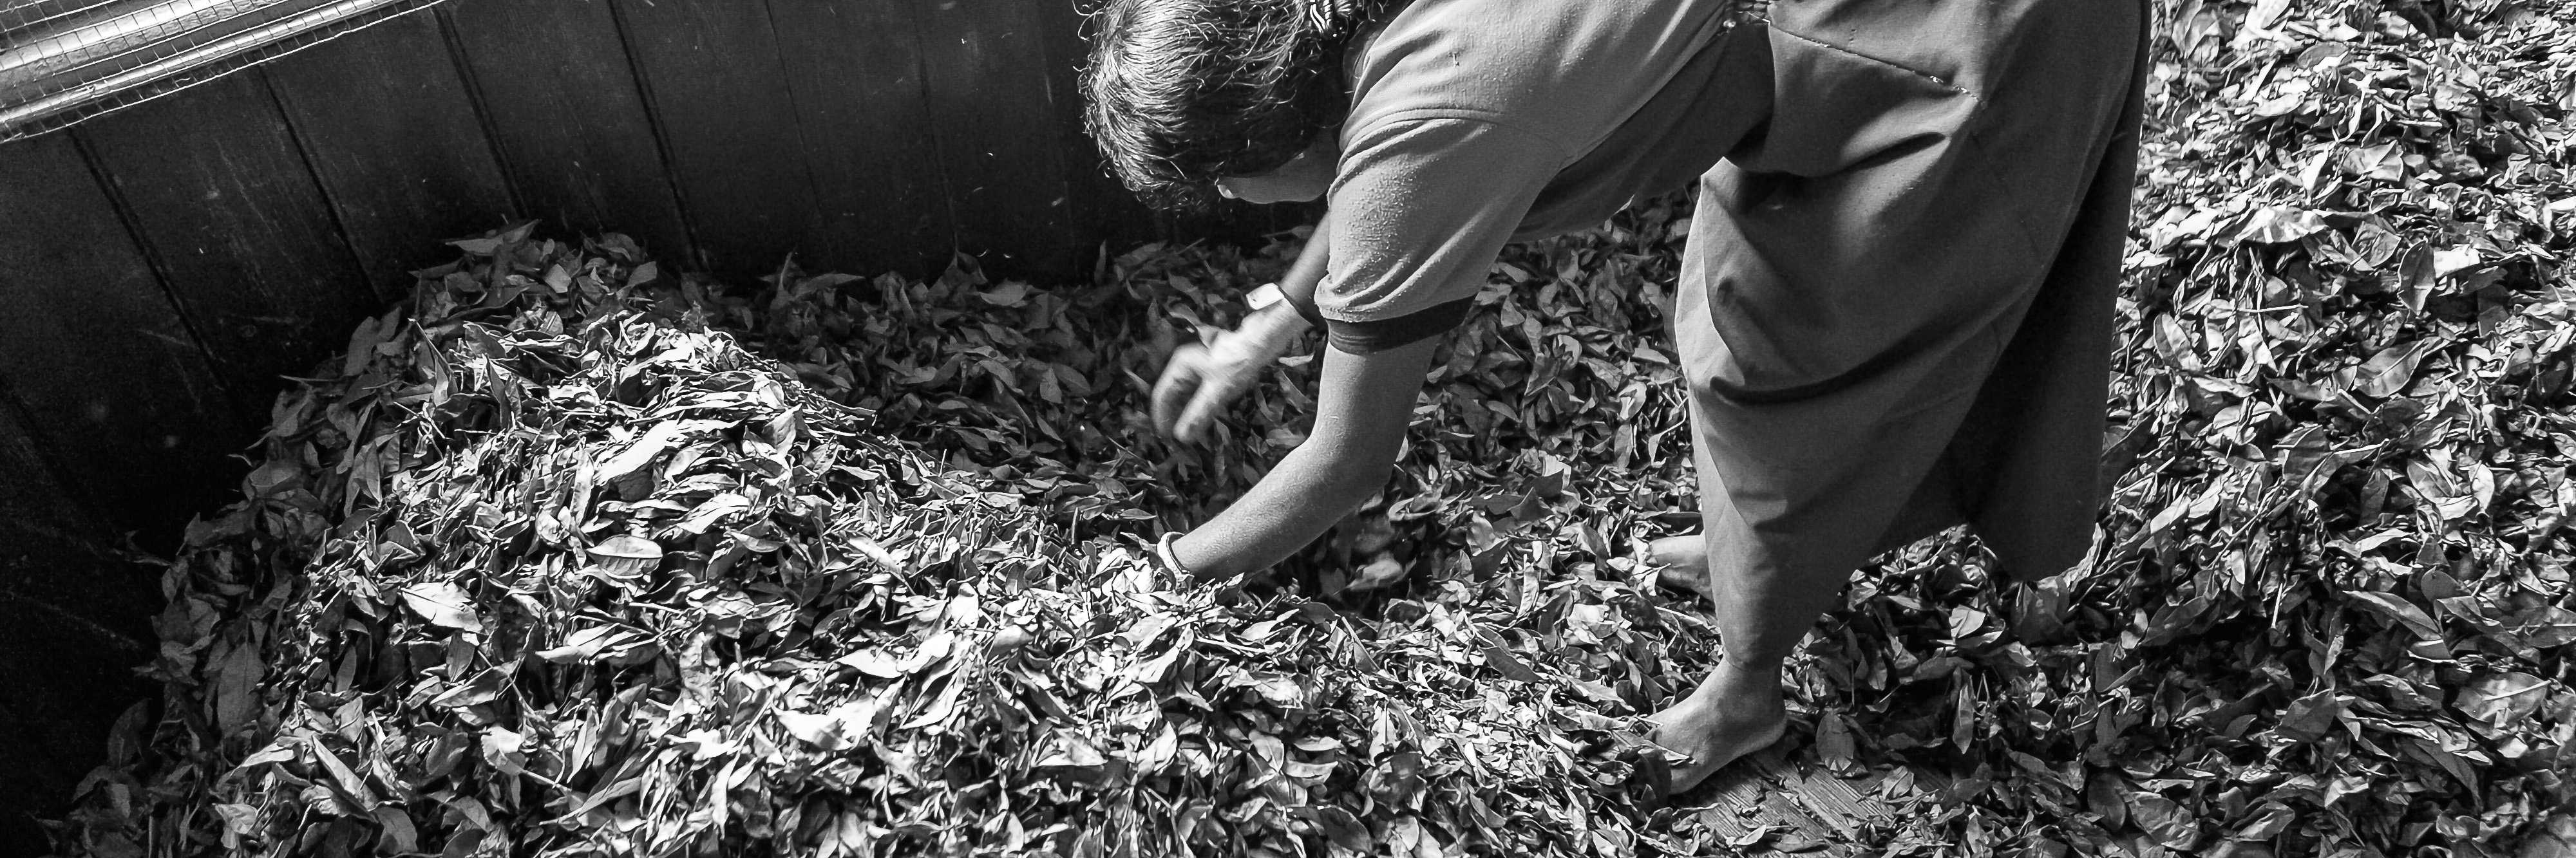 woman processing tea leaves